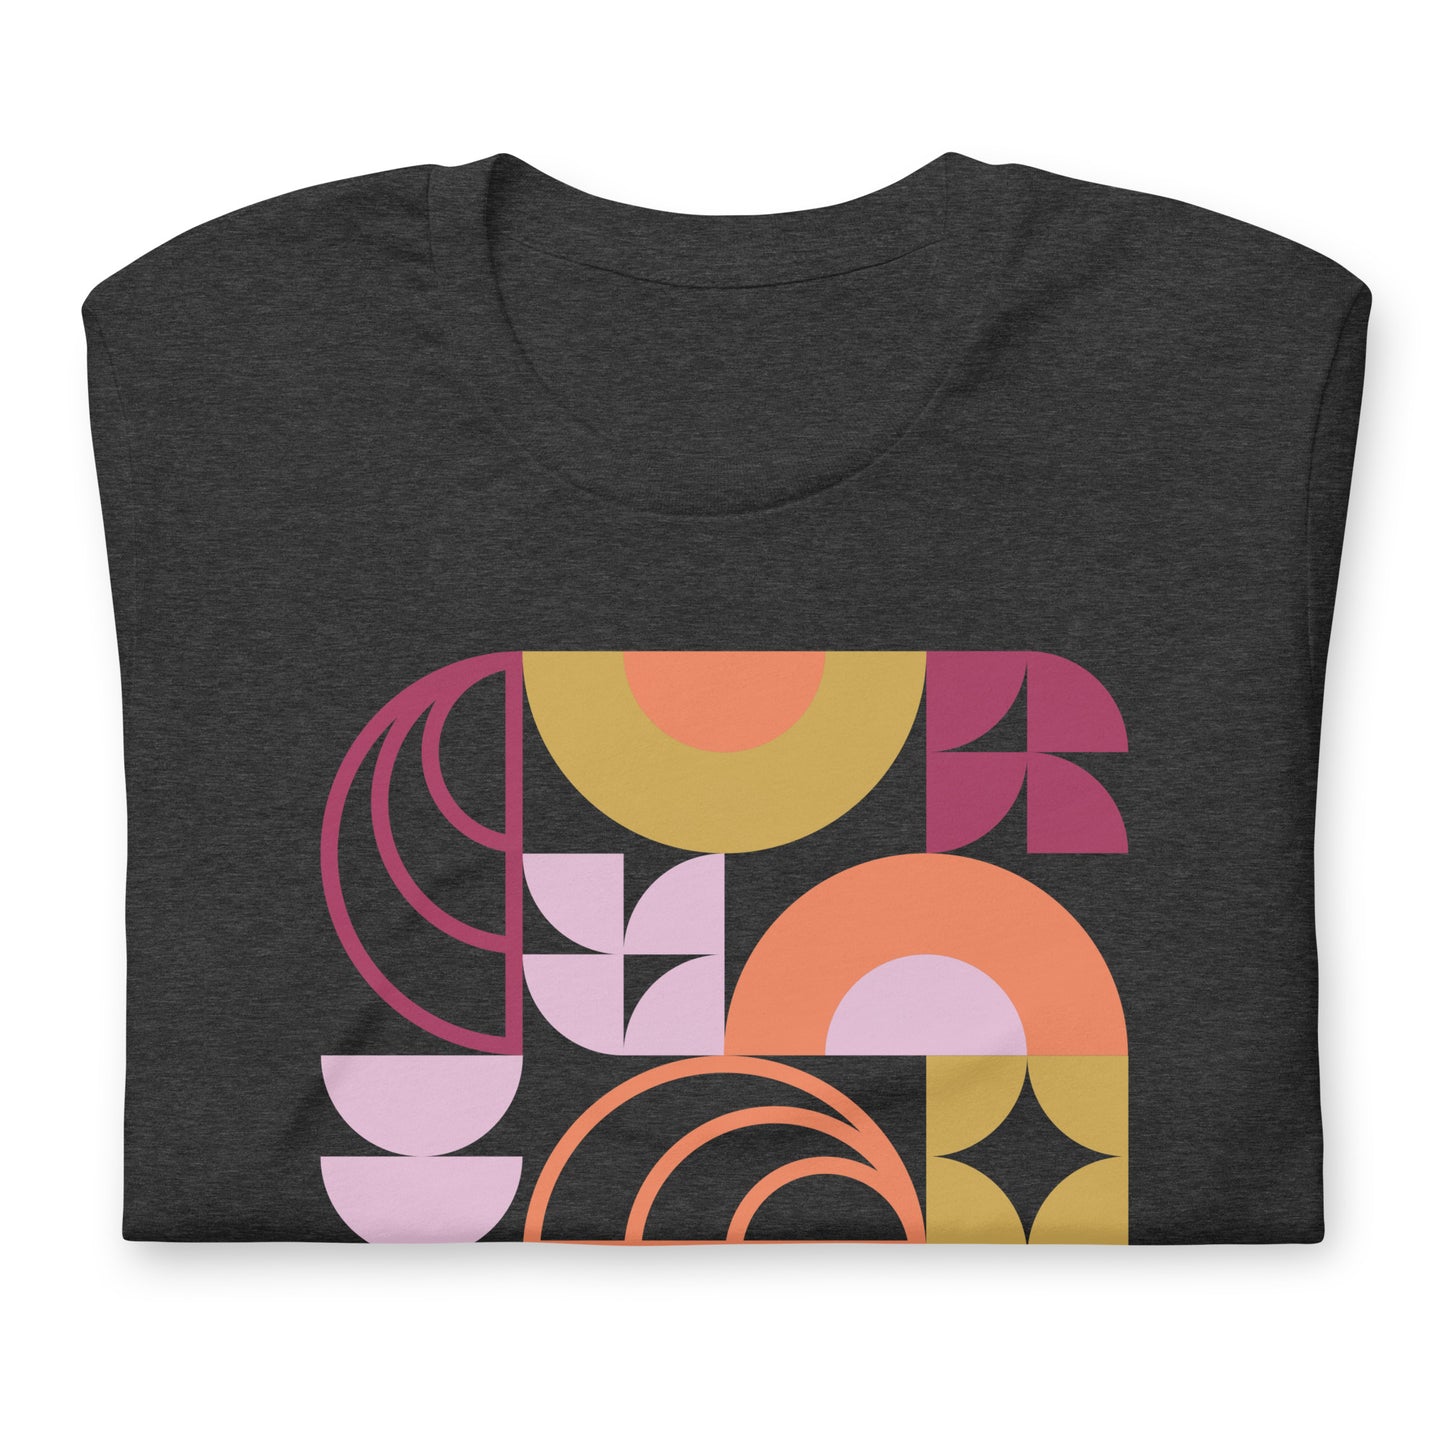 Geometria II Sunset Unisex T-shirt